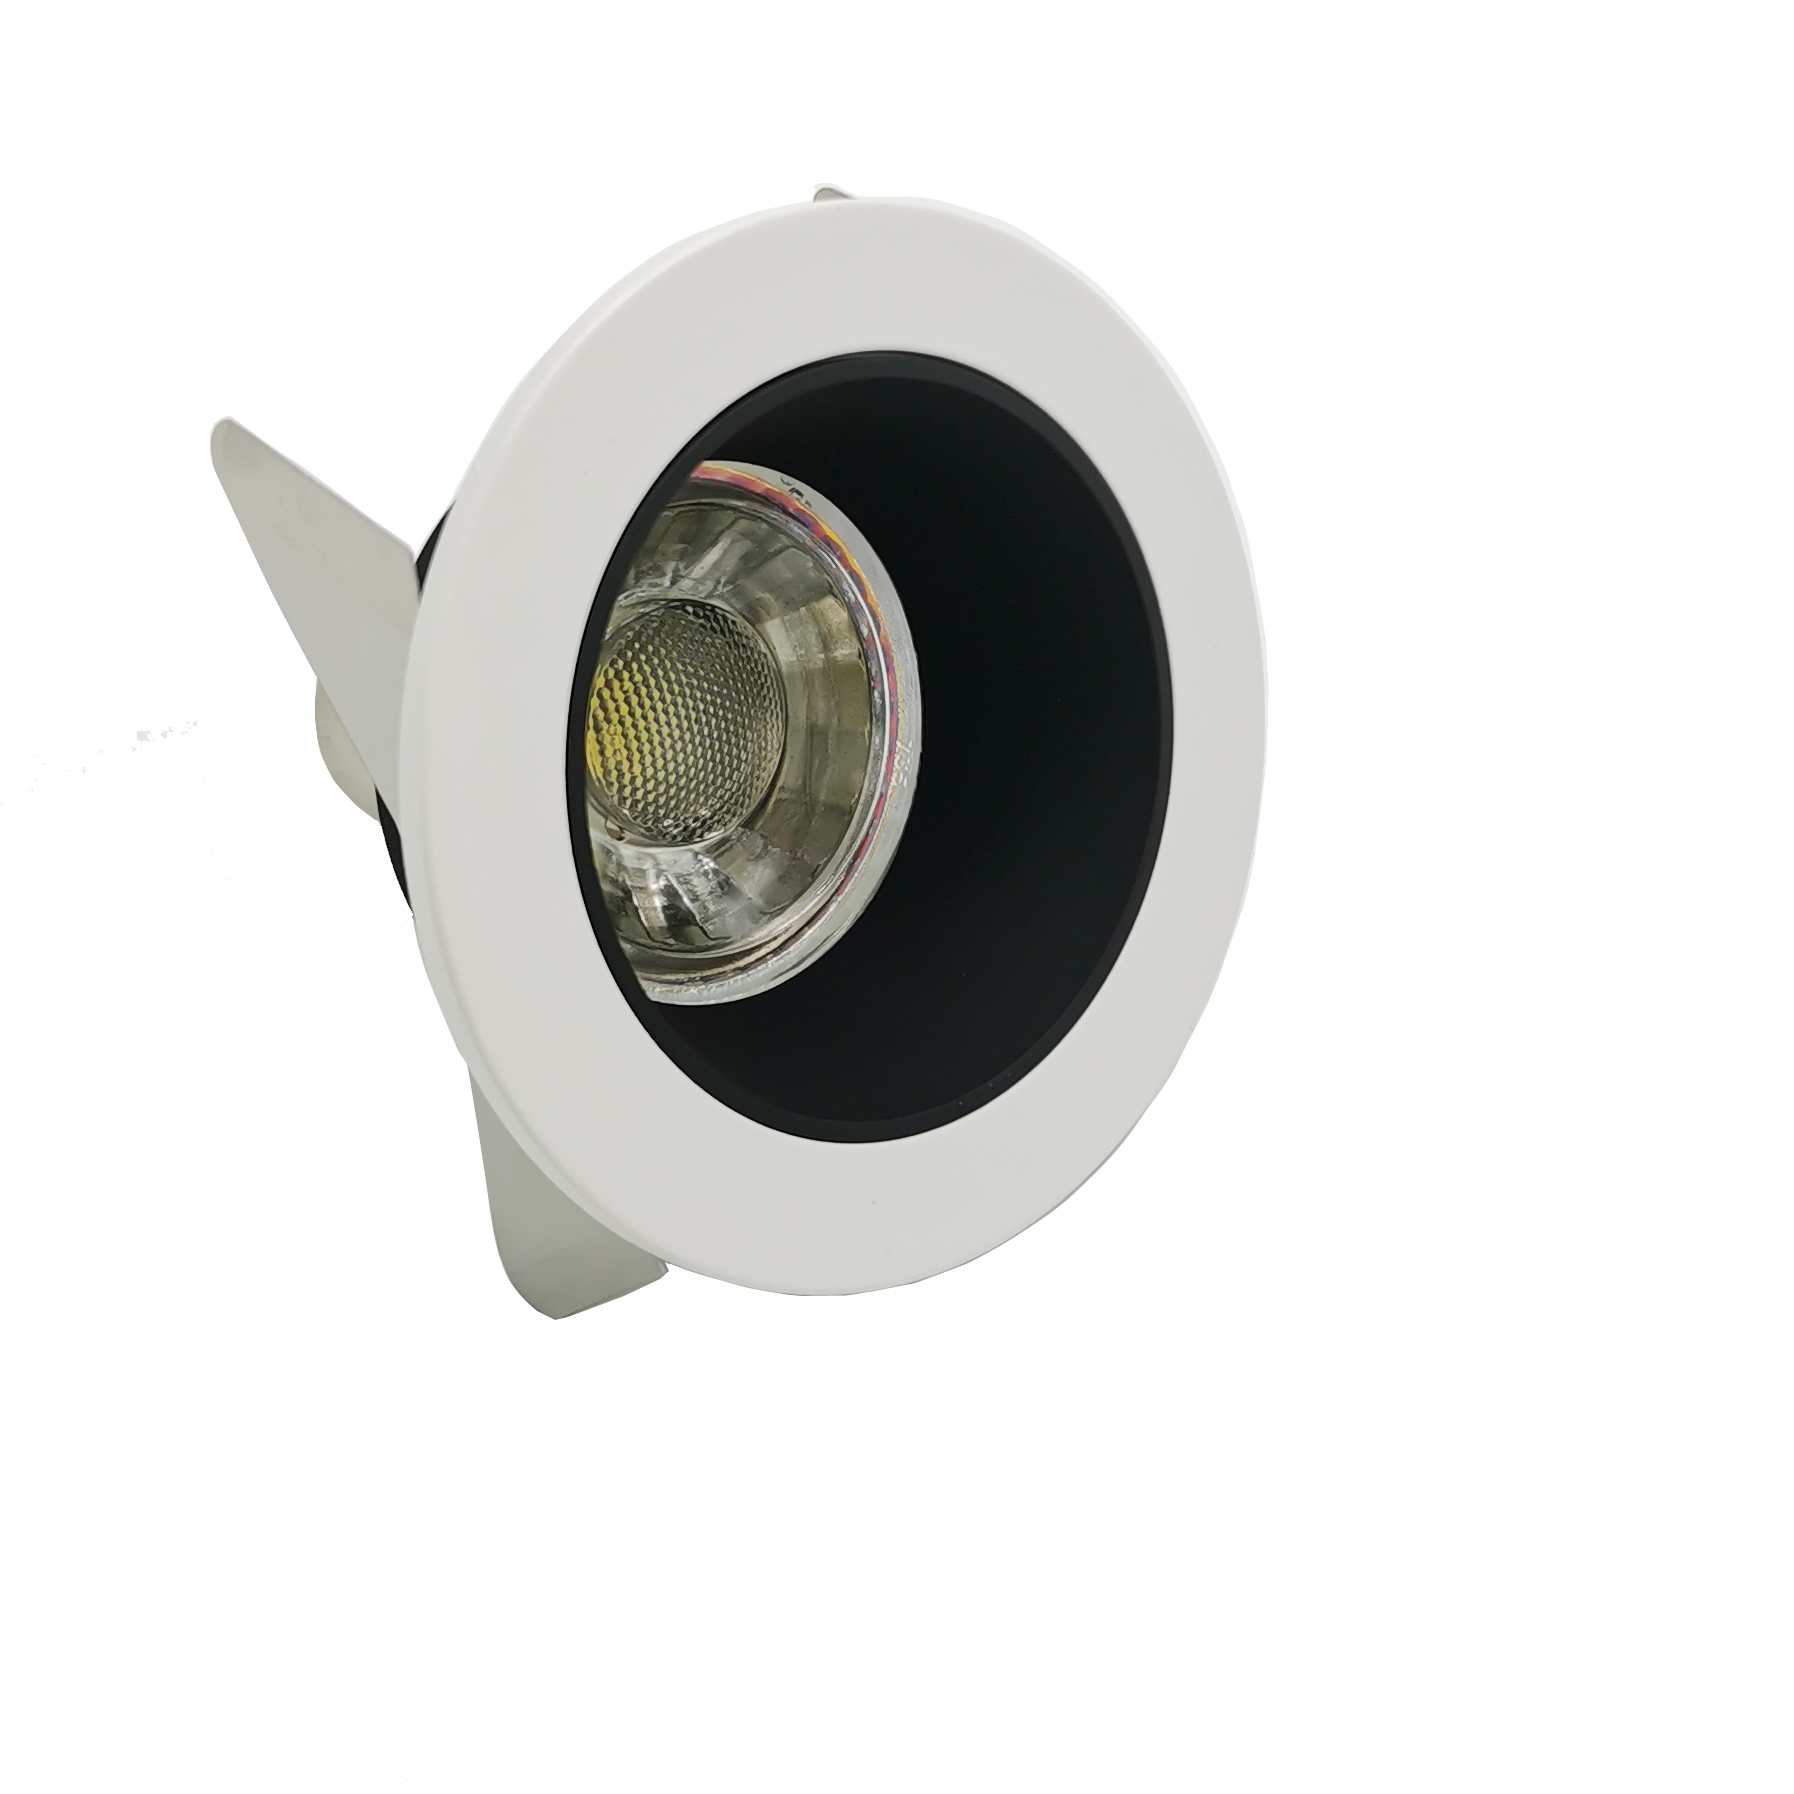 80mm Round Recessed LED Ceiling Light MR16 GU10 Downlight Holder